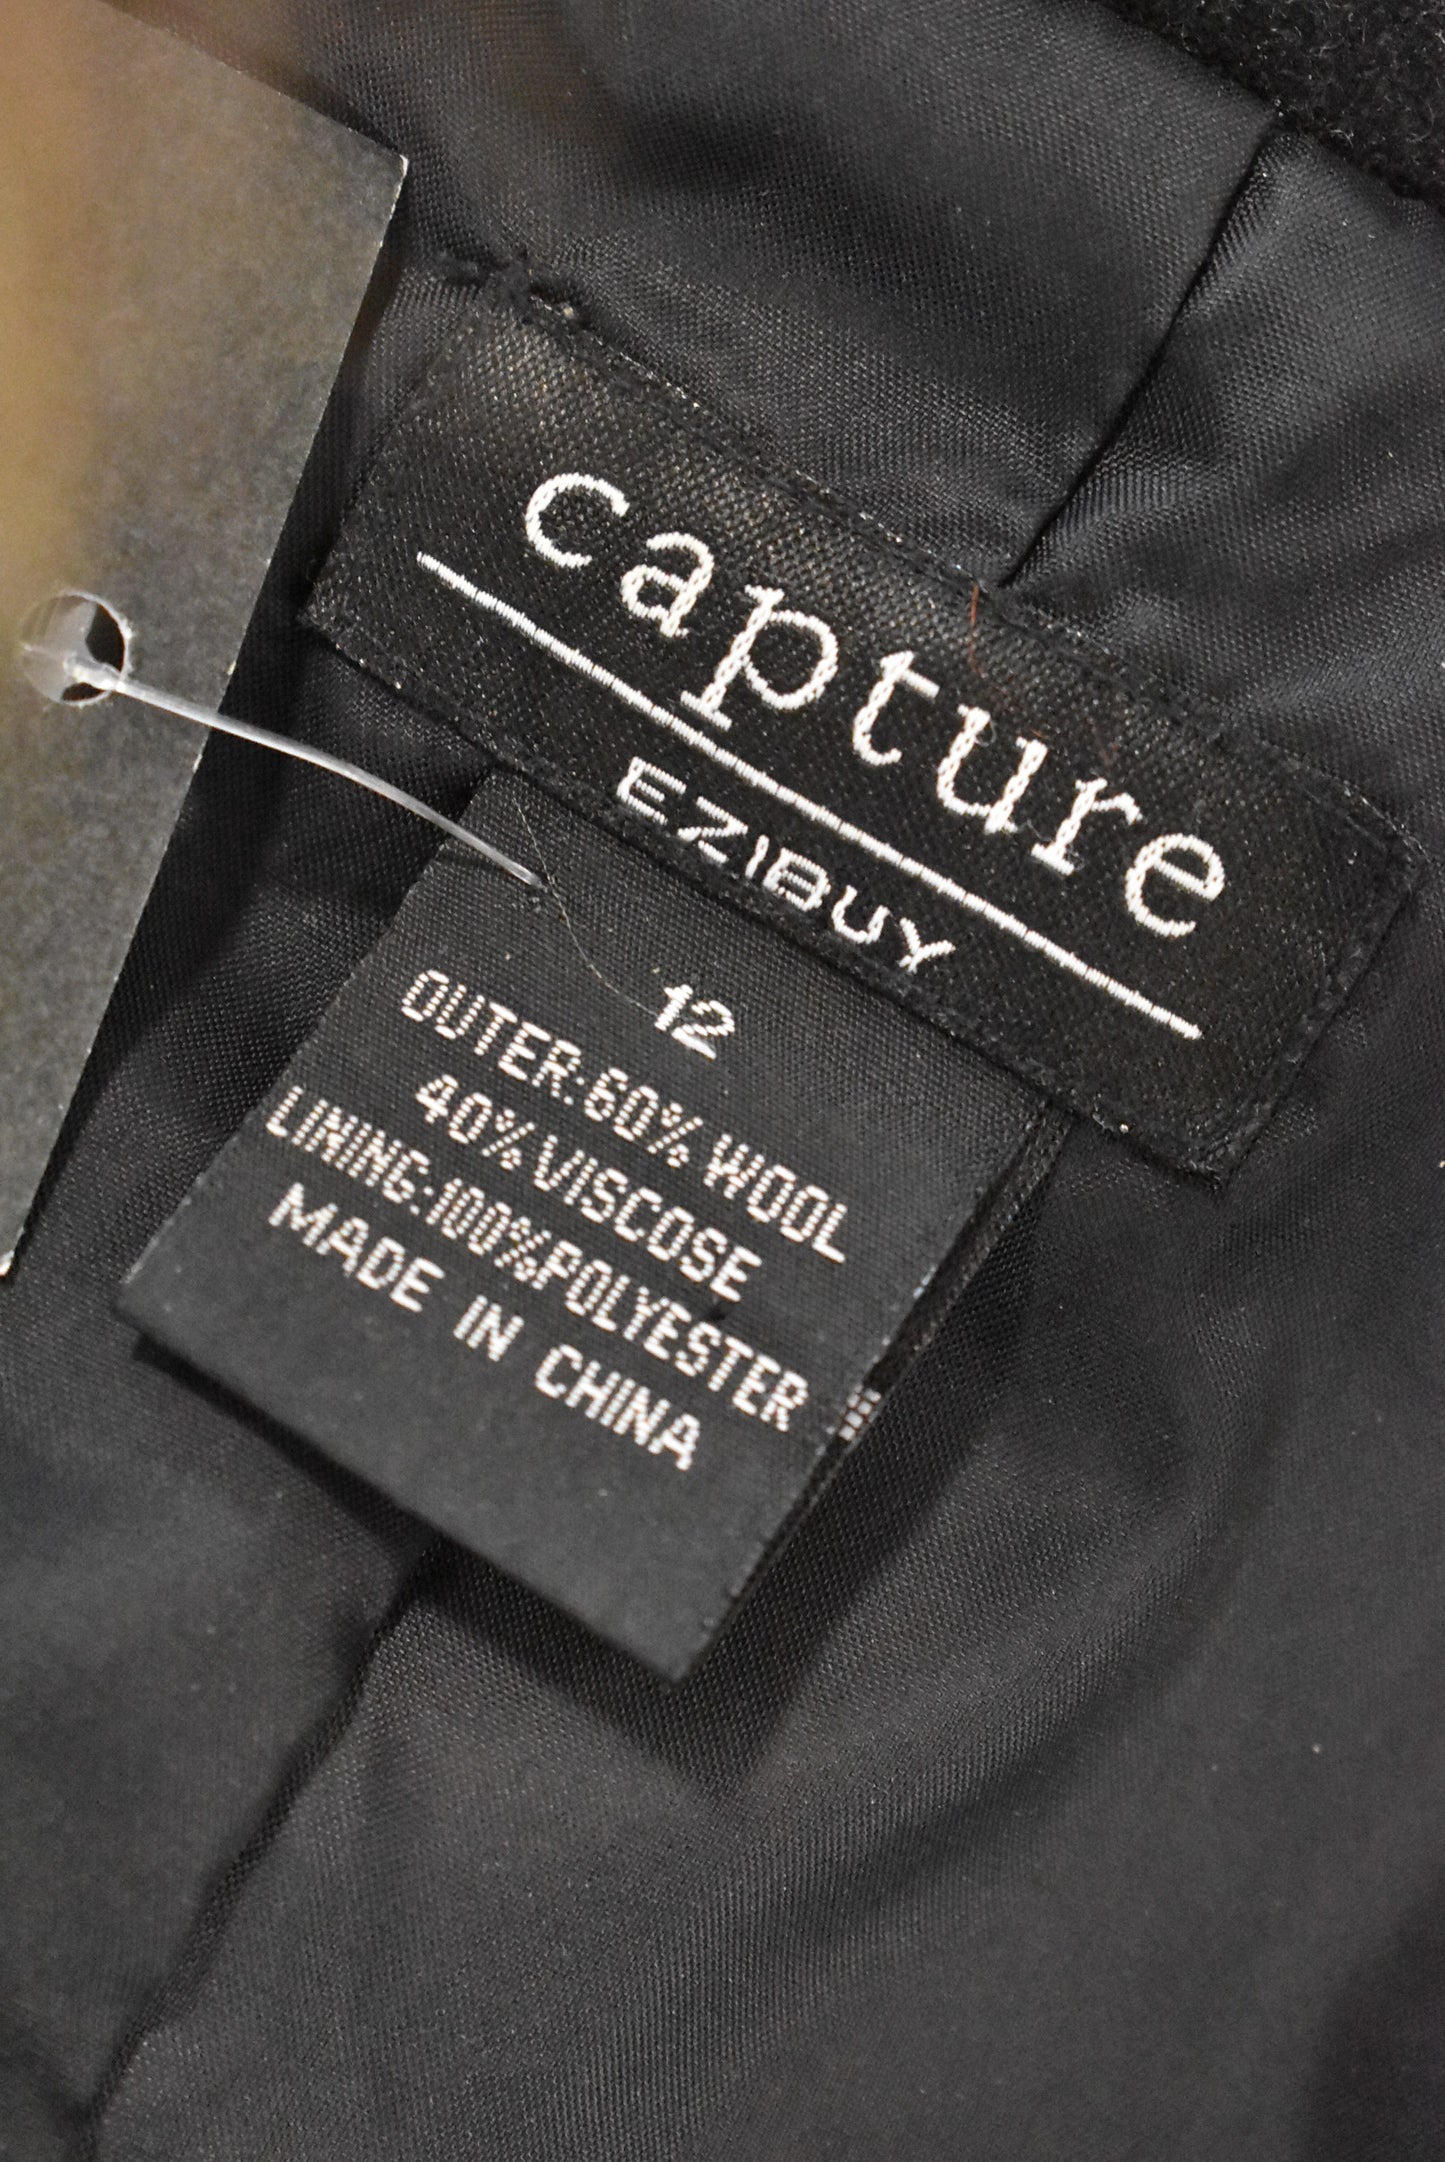 Capture, wool blend black coat, 12